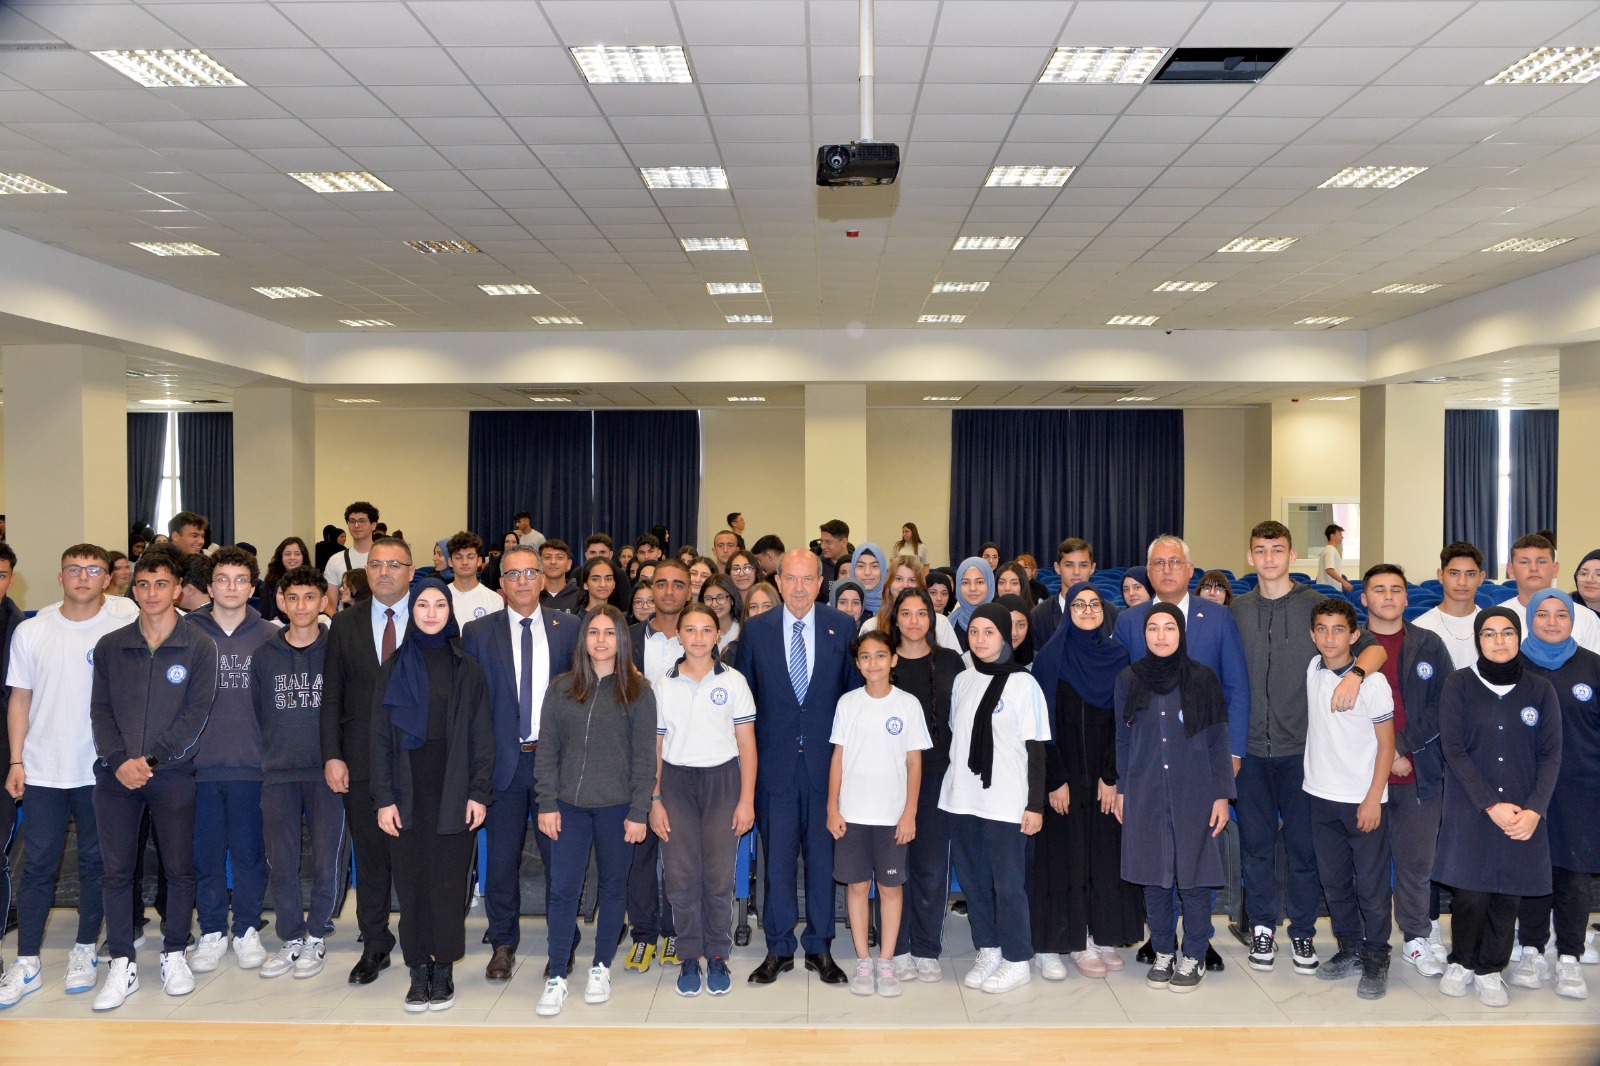 Cumhurbaşkanı Tatar Hala Sultan İlahiyat Koleji’ni ziyaret etti